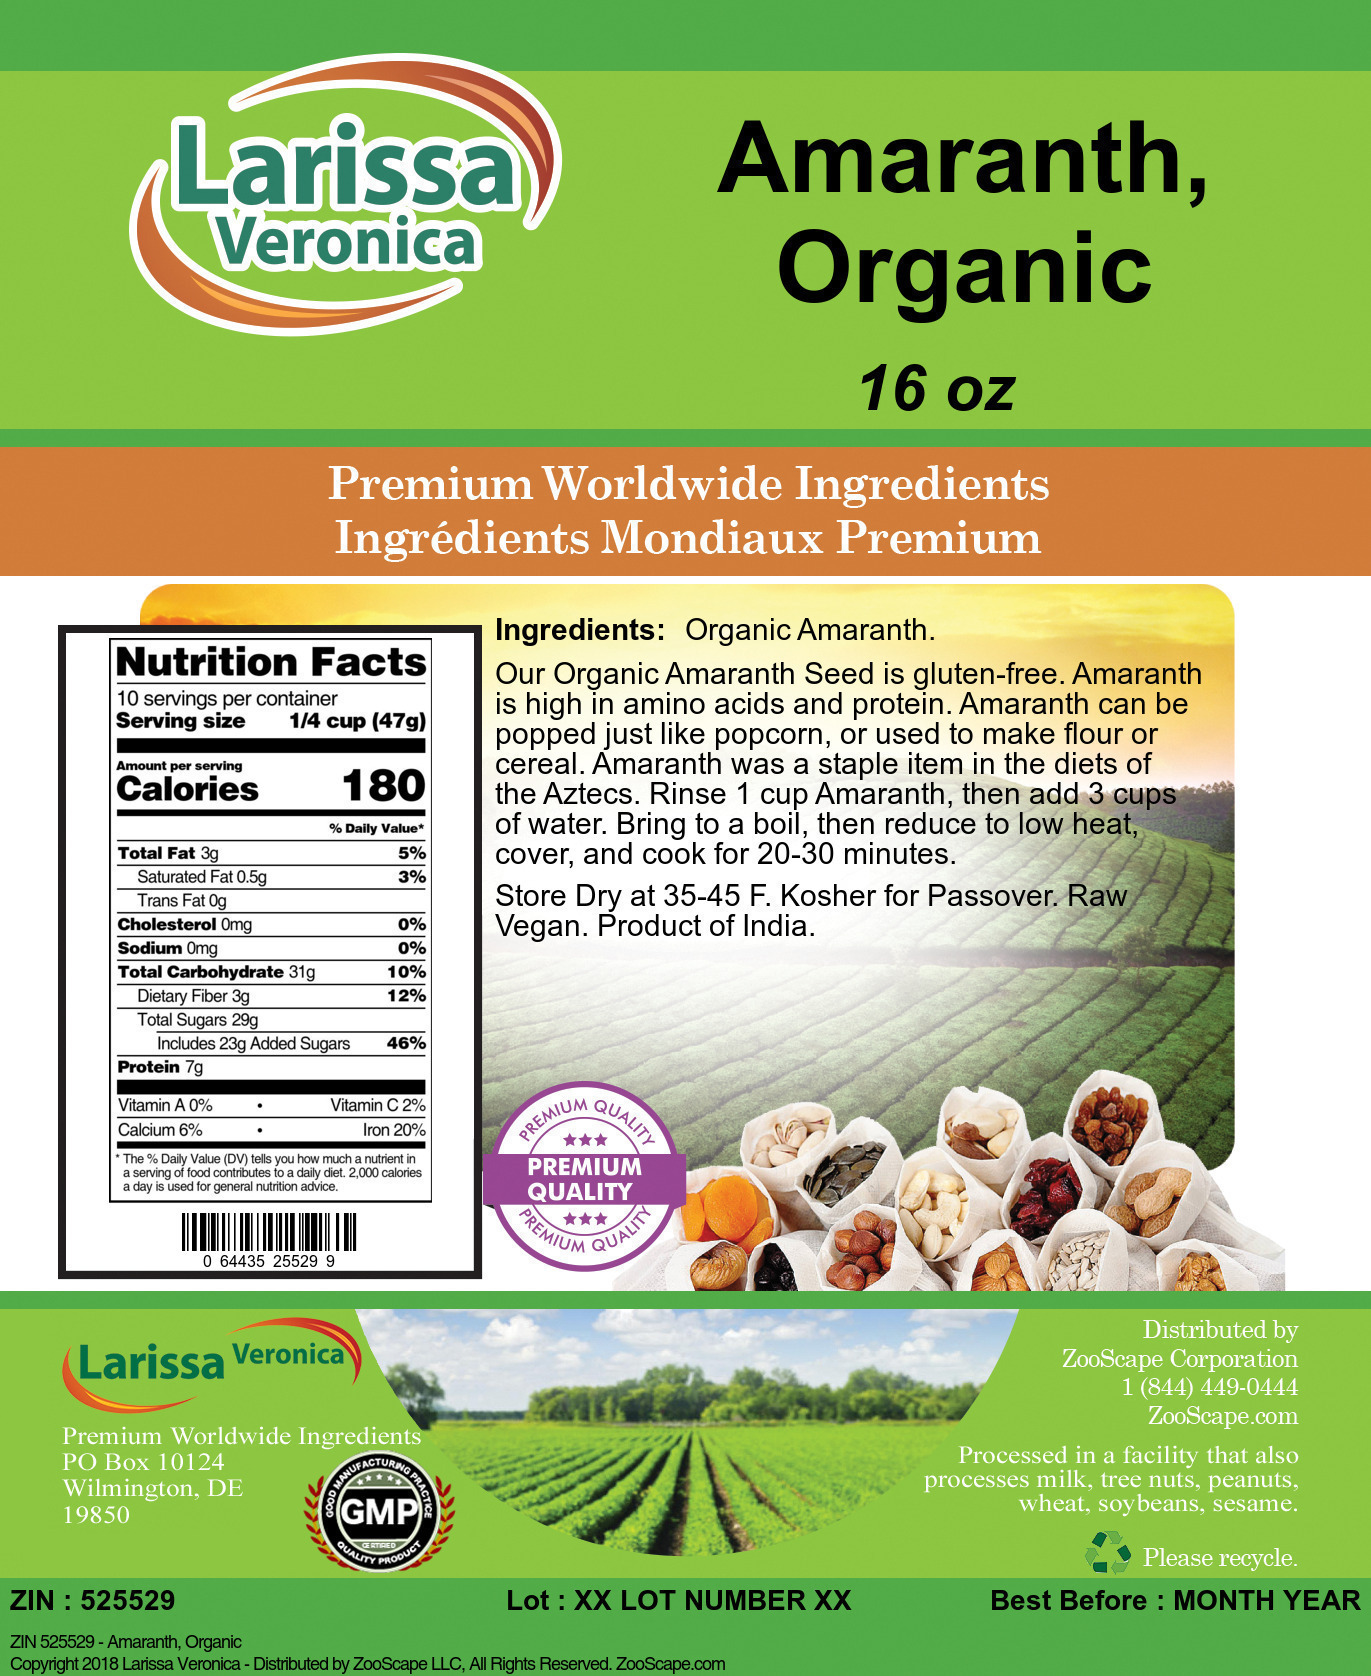 Amaranth, Organic - Label